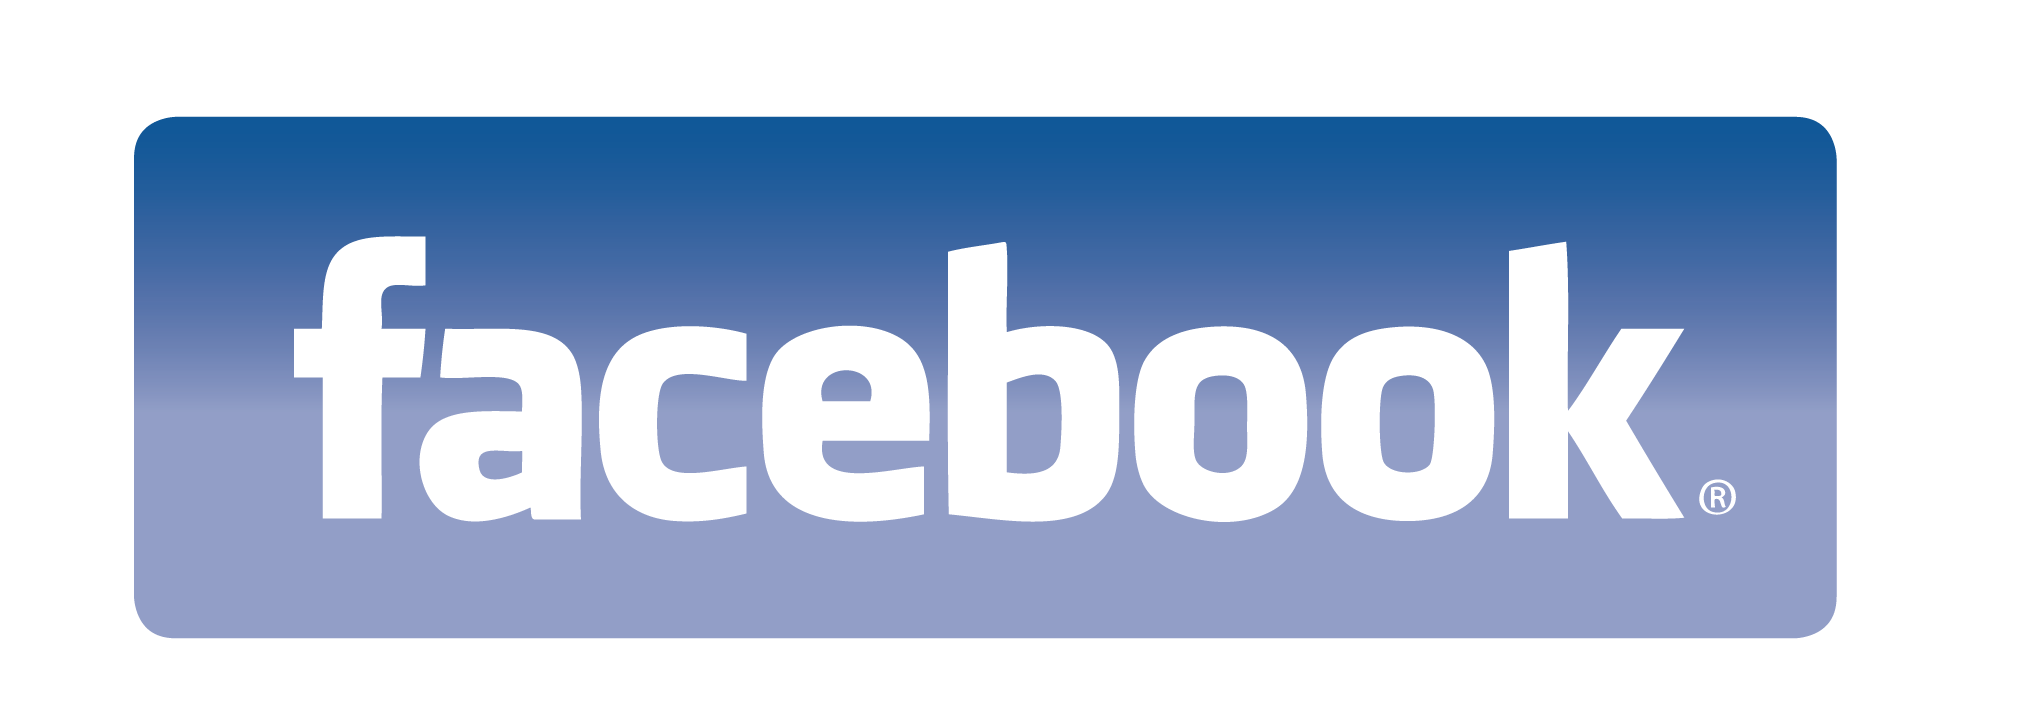 facebook_logo_largo